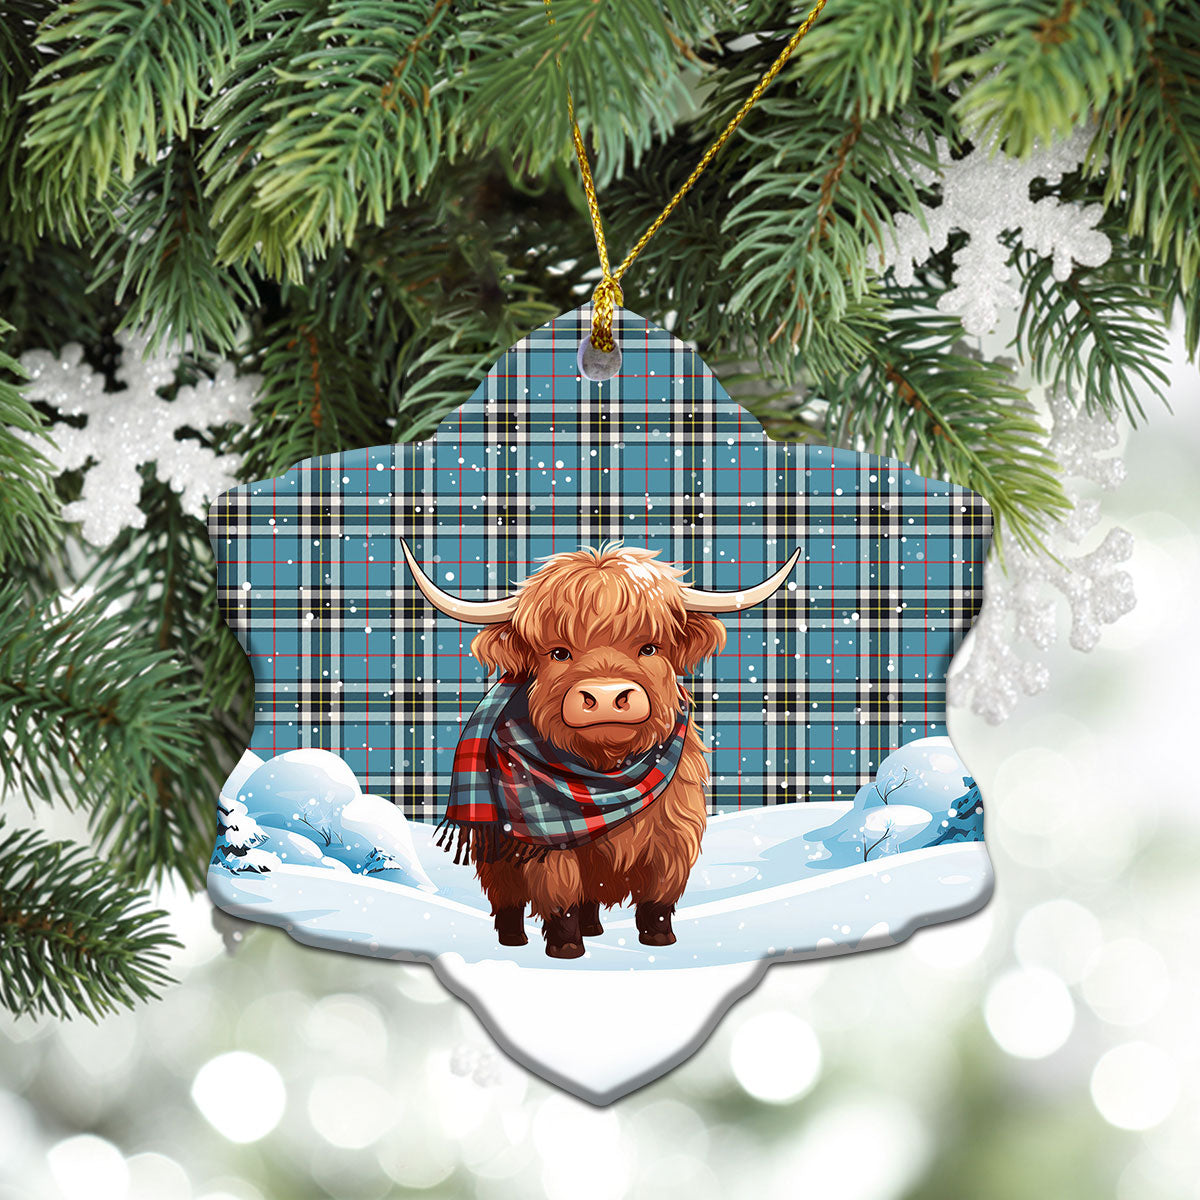 Thomson Blue Tartan Christmas Ceramic Ornament - Highland Cows Snow Style